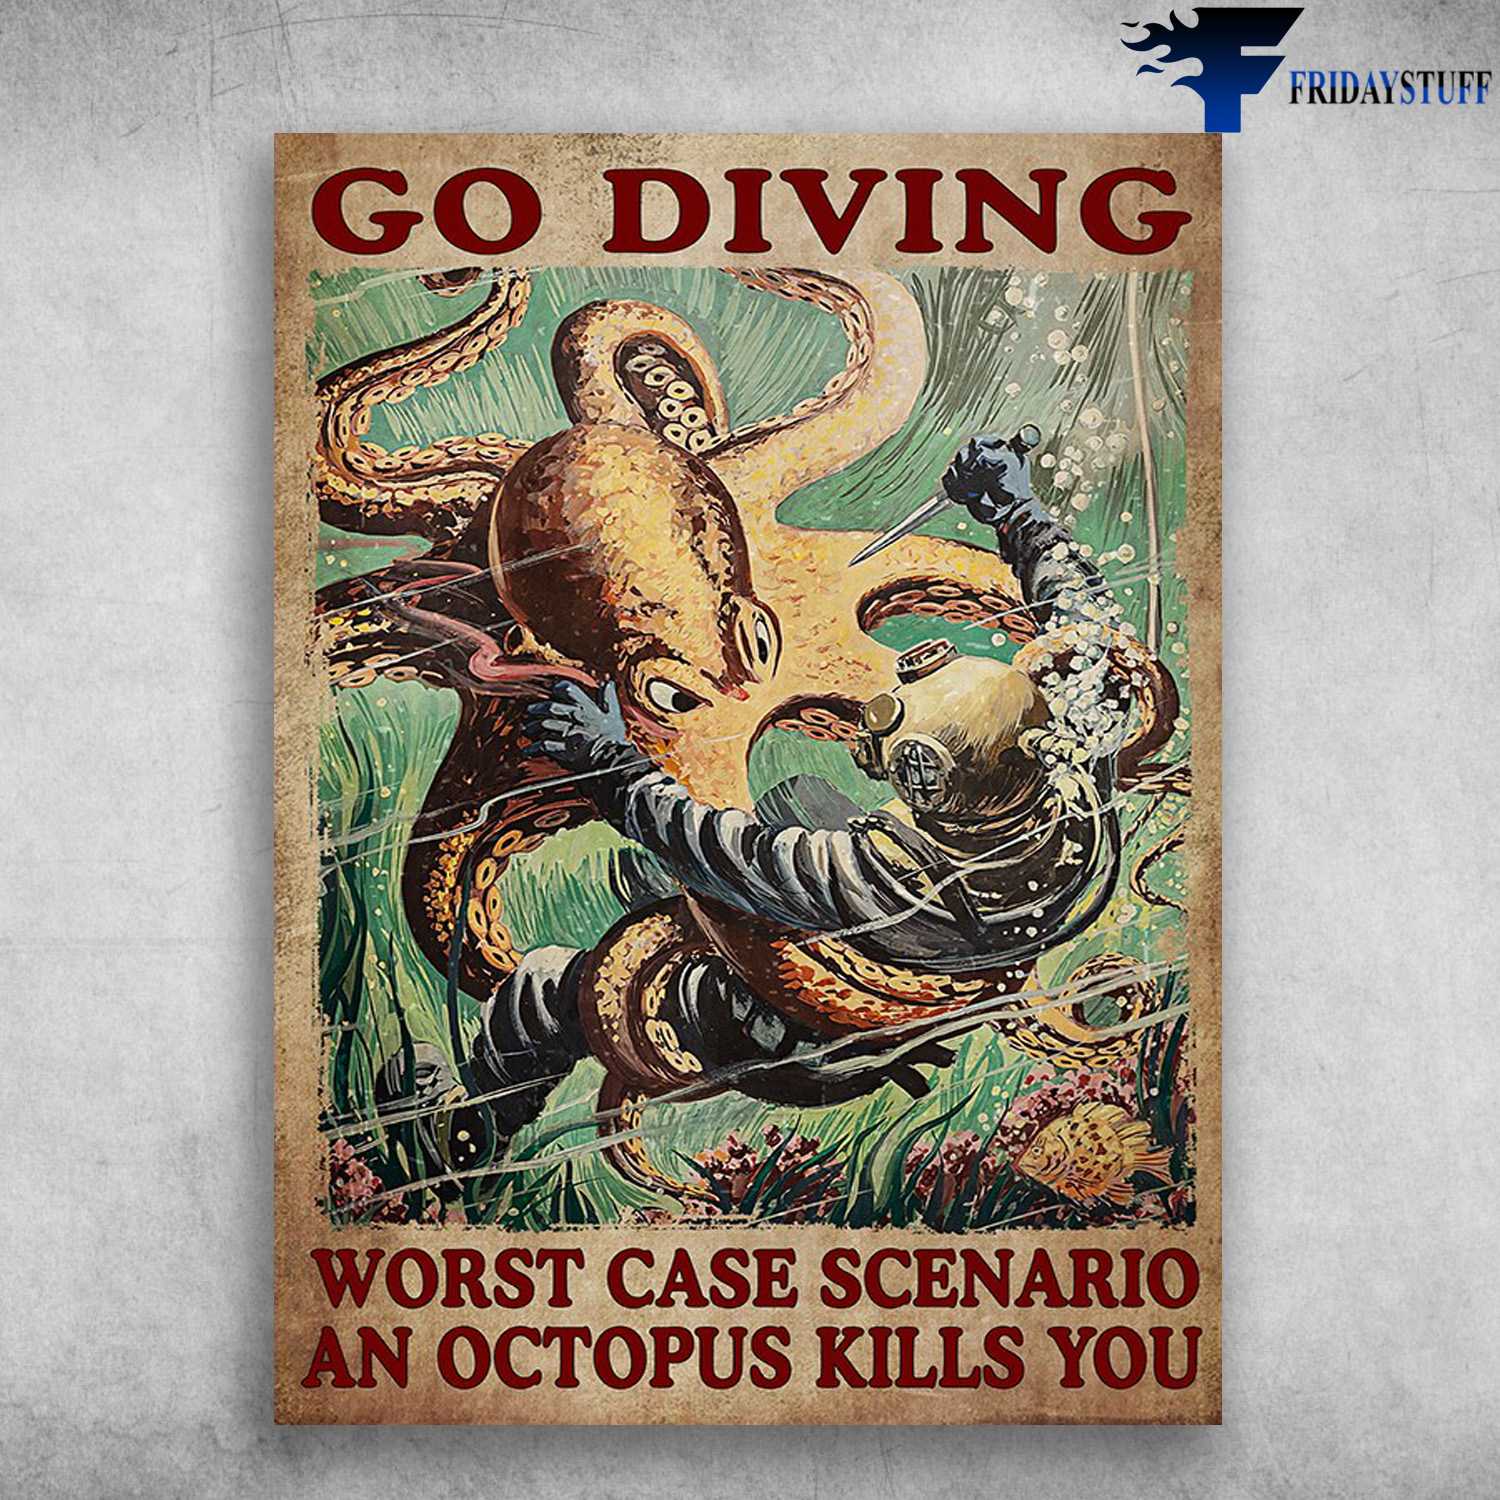 Diver And Octopus, Scuba Diving - Go Diving, Worst Case Scenario, An Octopus Kills Uou